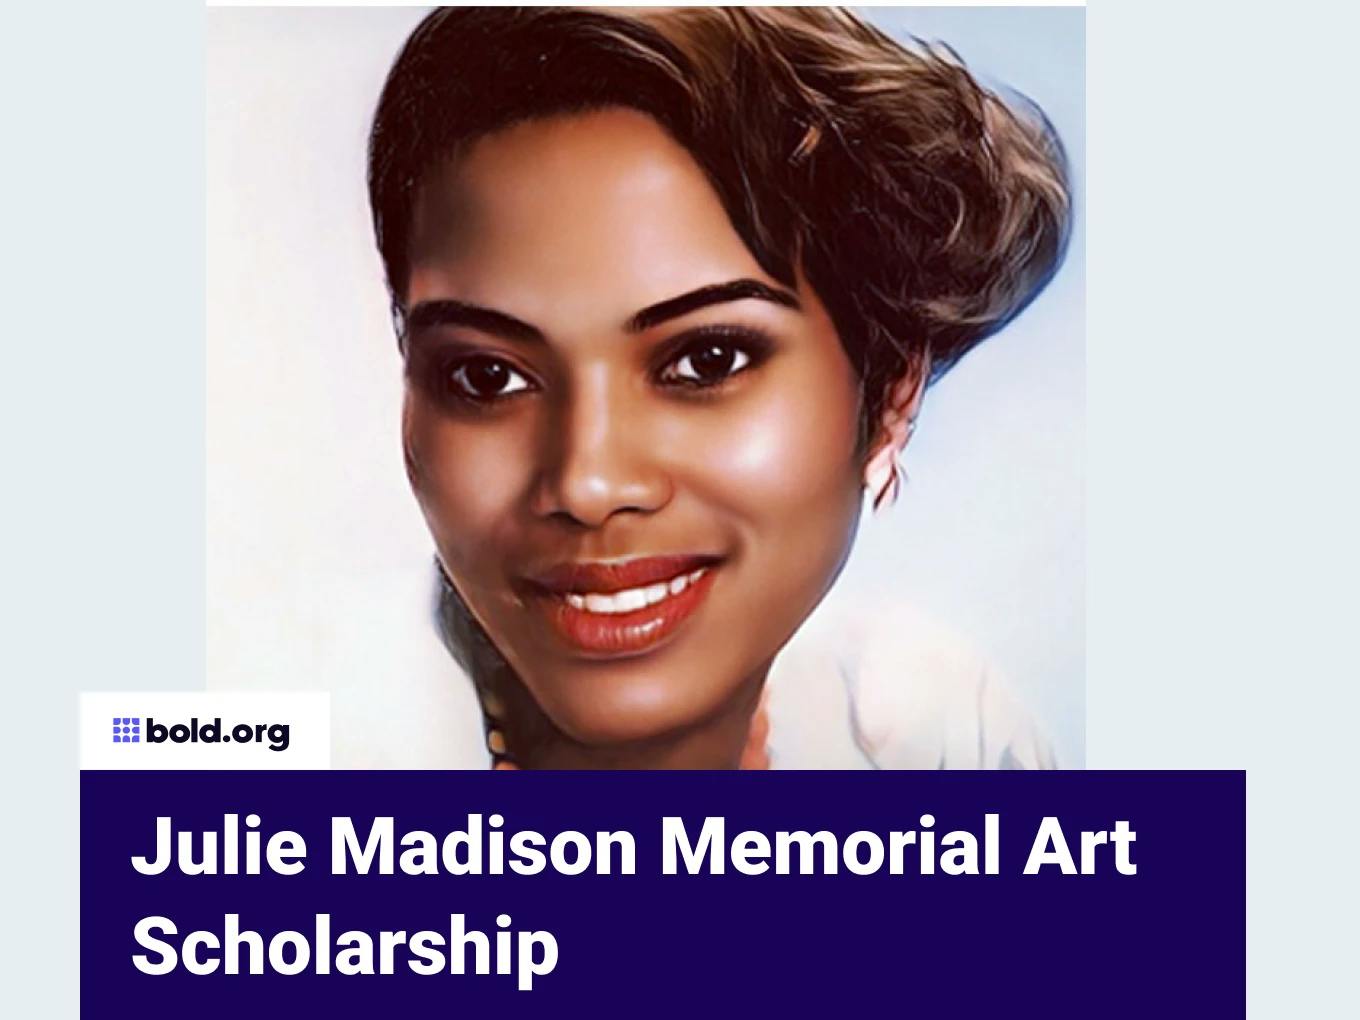 Julie Madison Memorial Art Scholarship